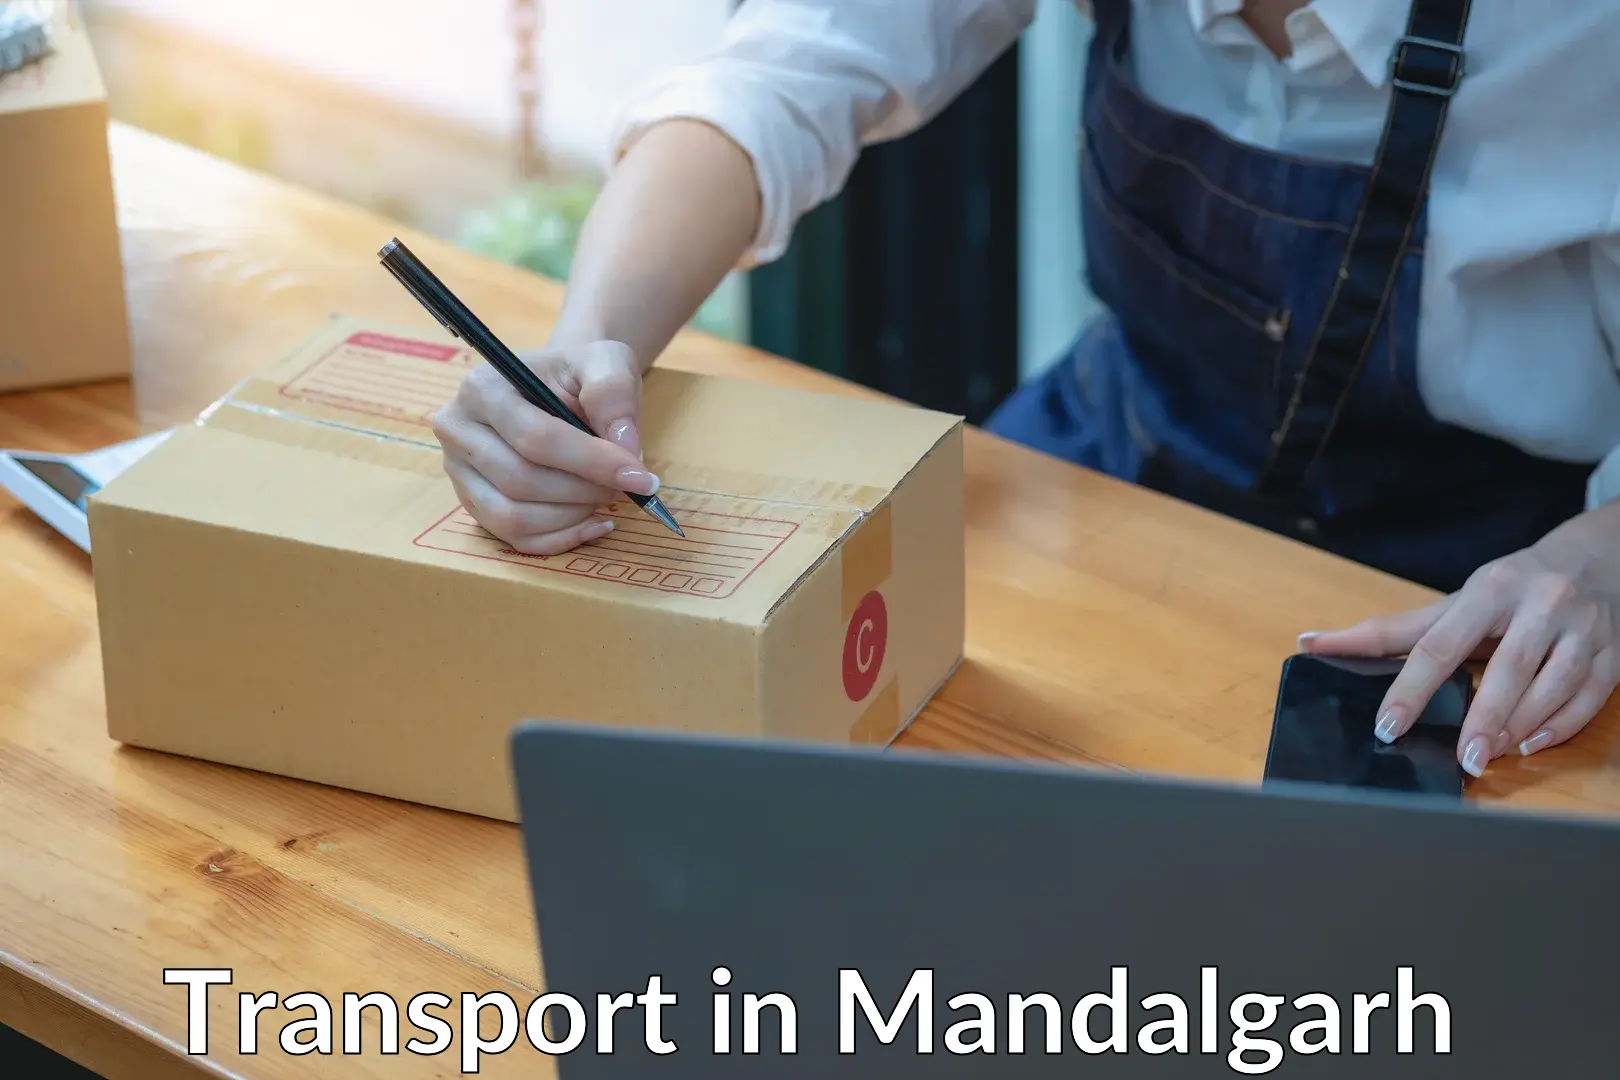 Container transport service in Mandalgarh